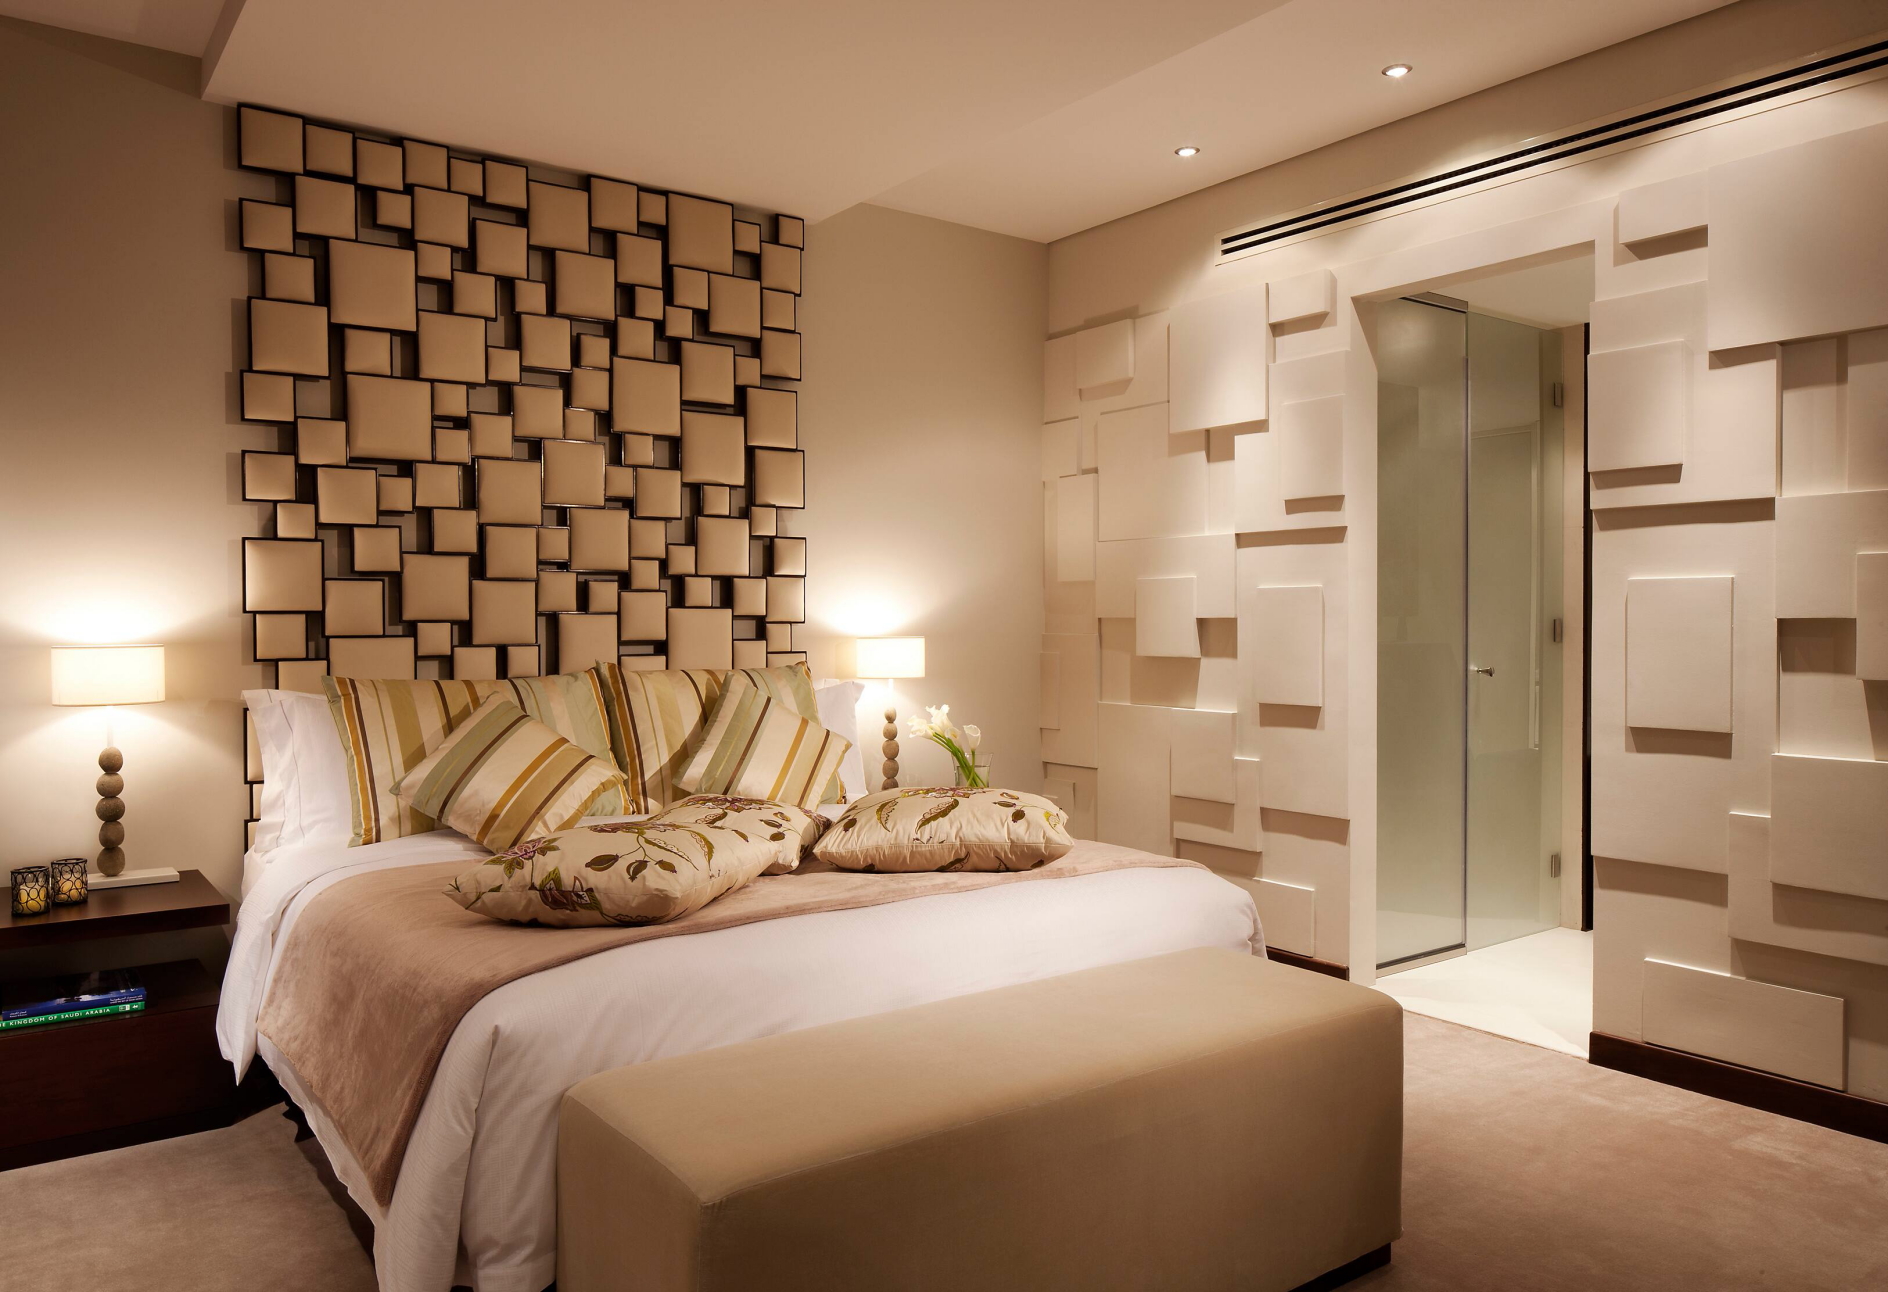 South Wing Oasis Suite Bedroom at Mandarin Oriental Al Faisaliah, Riyadh. Click to enlarge.